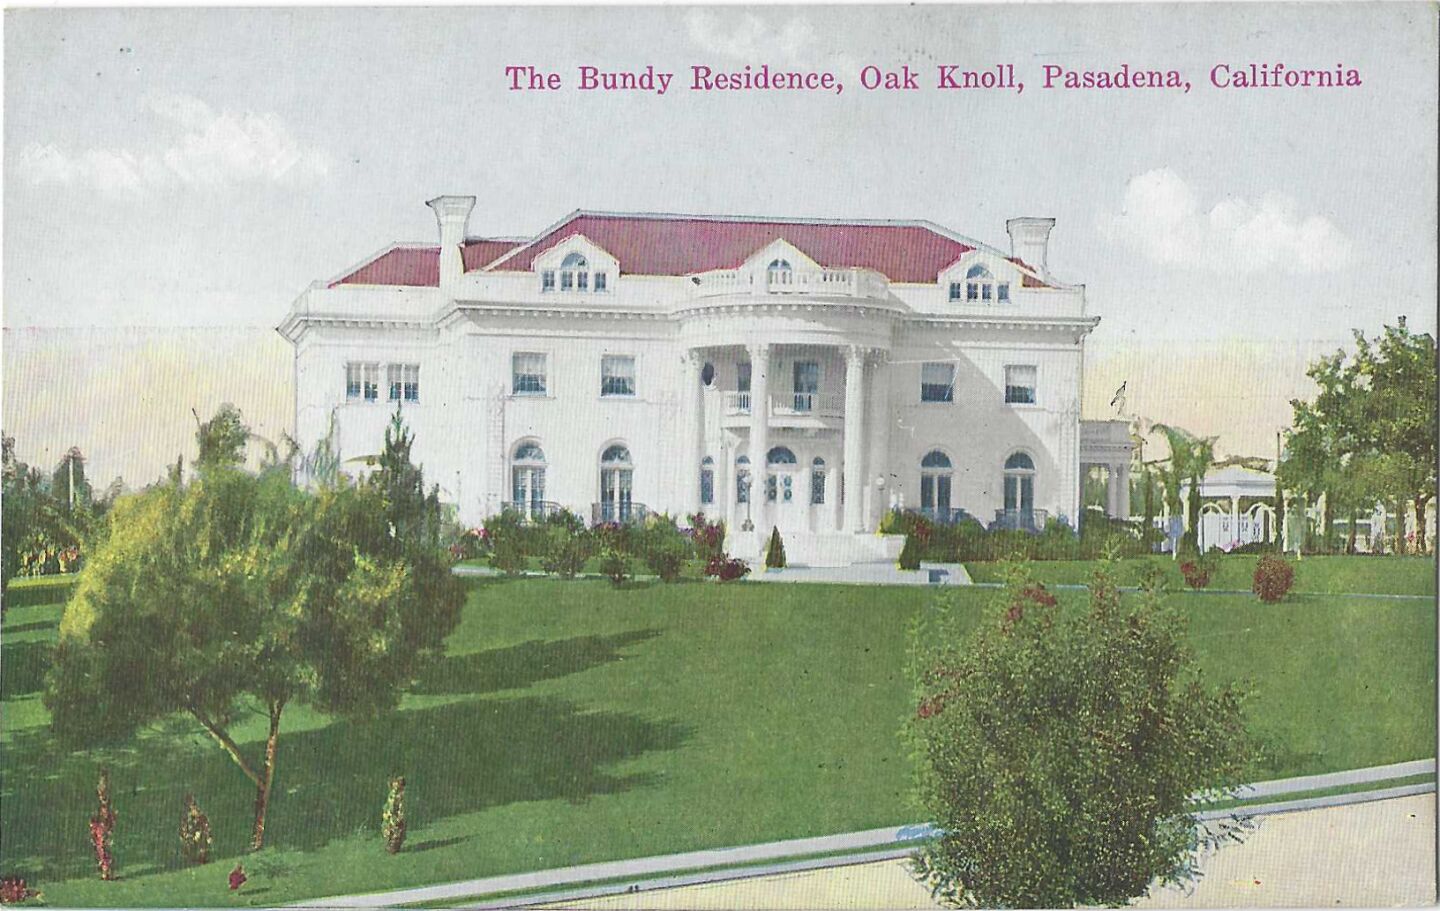 The Bundy Residence, Oak Knoll, Pasadena, California